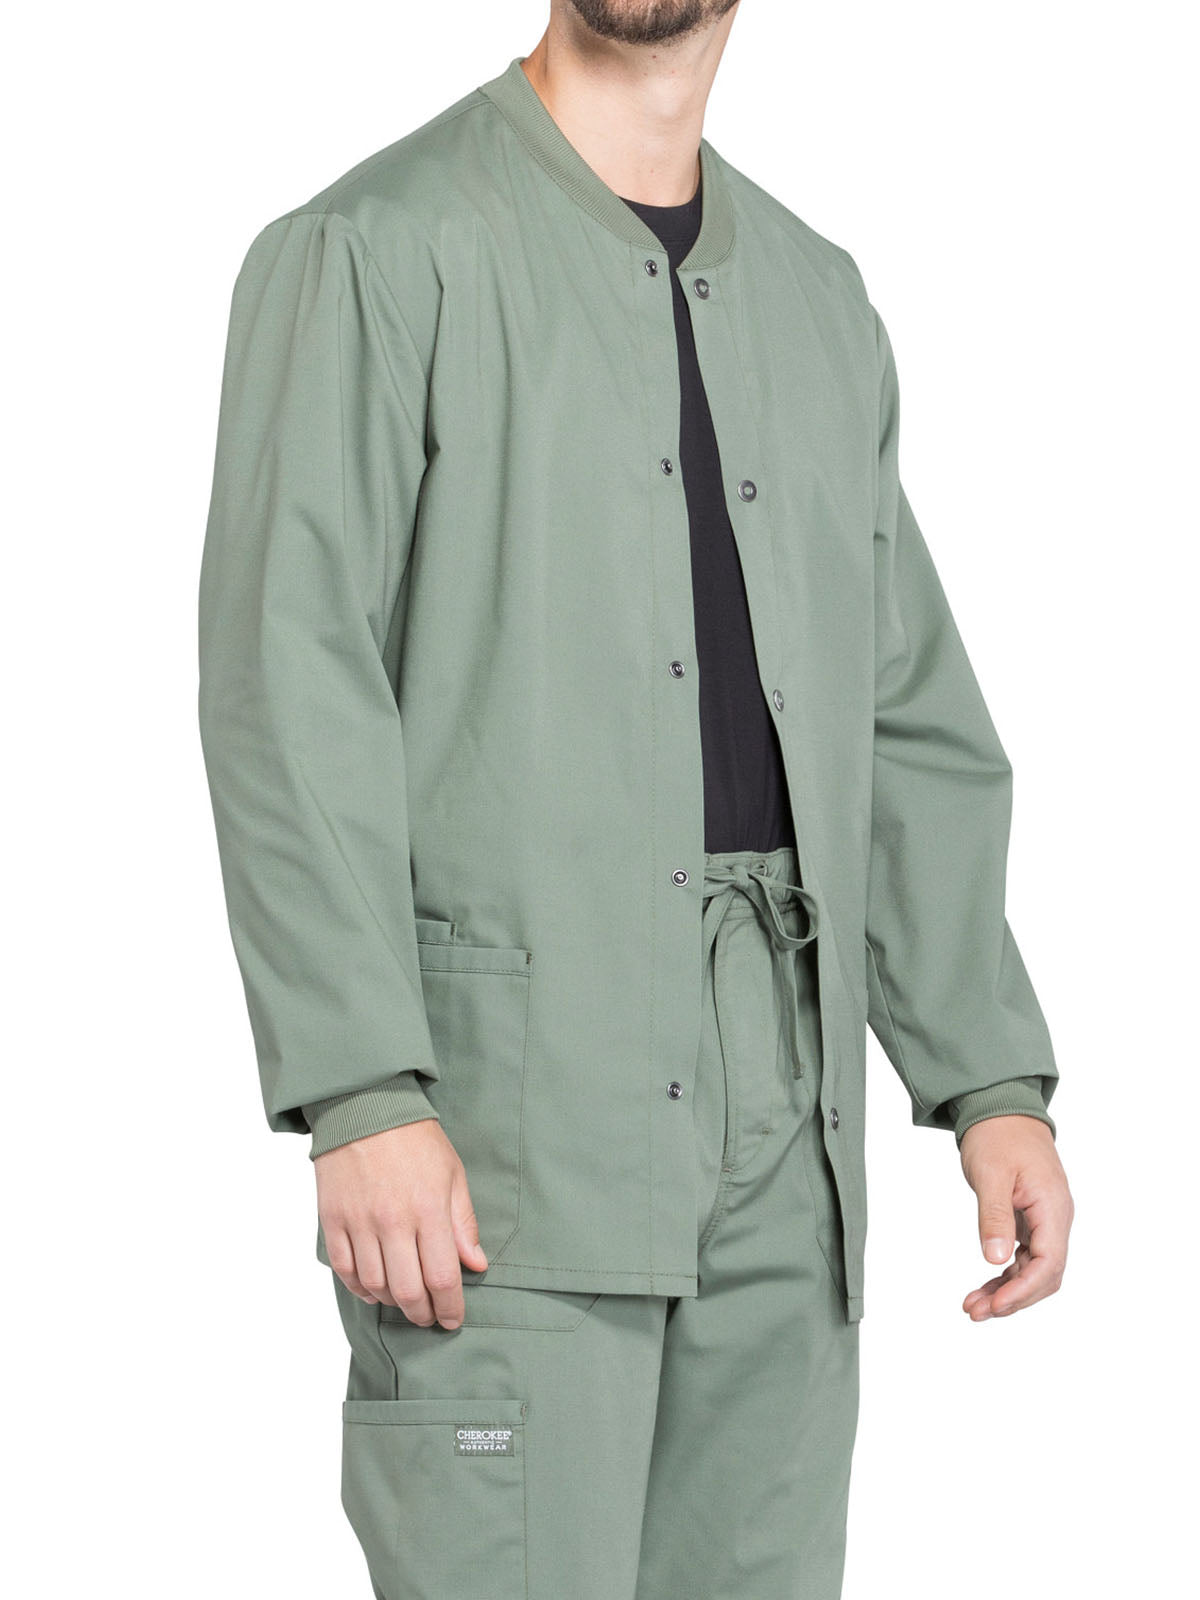 Men's 2-Pocket Snap Front Scrub Jacket